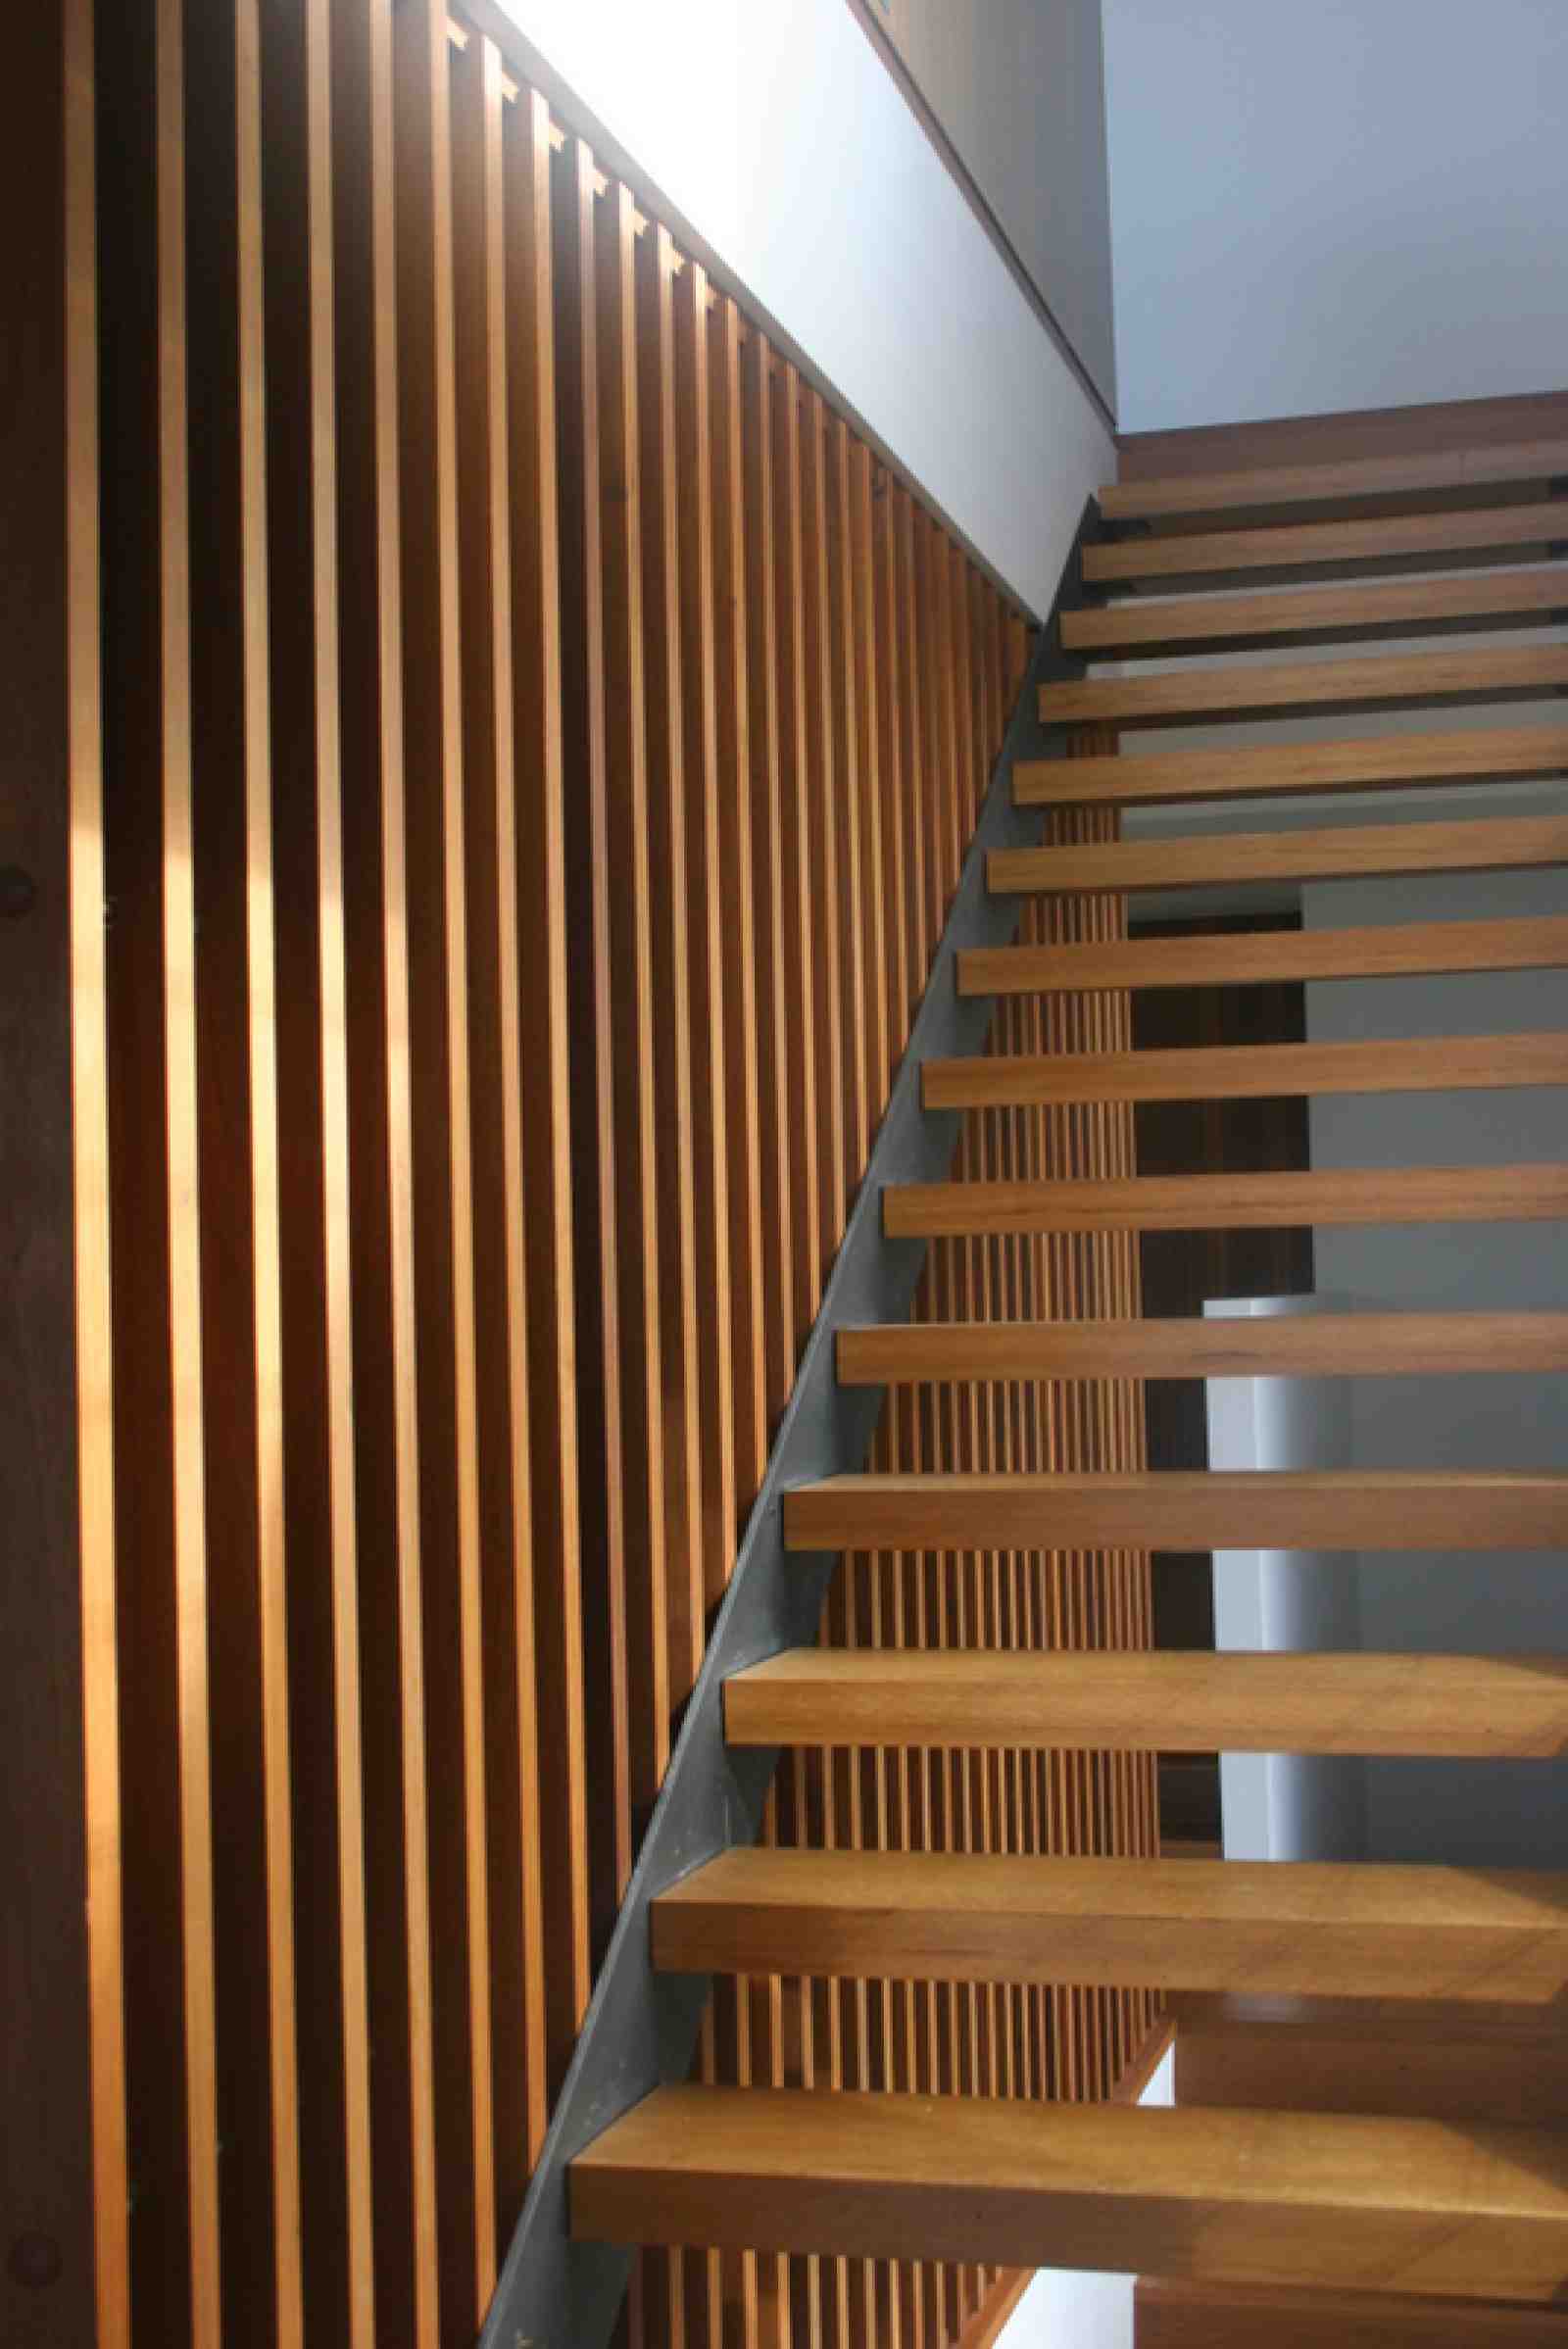 Дизайн на стене лестницы